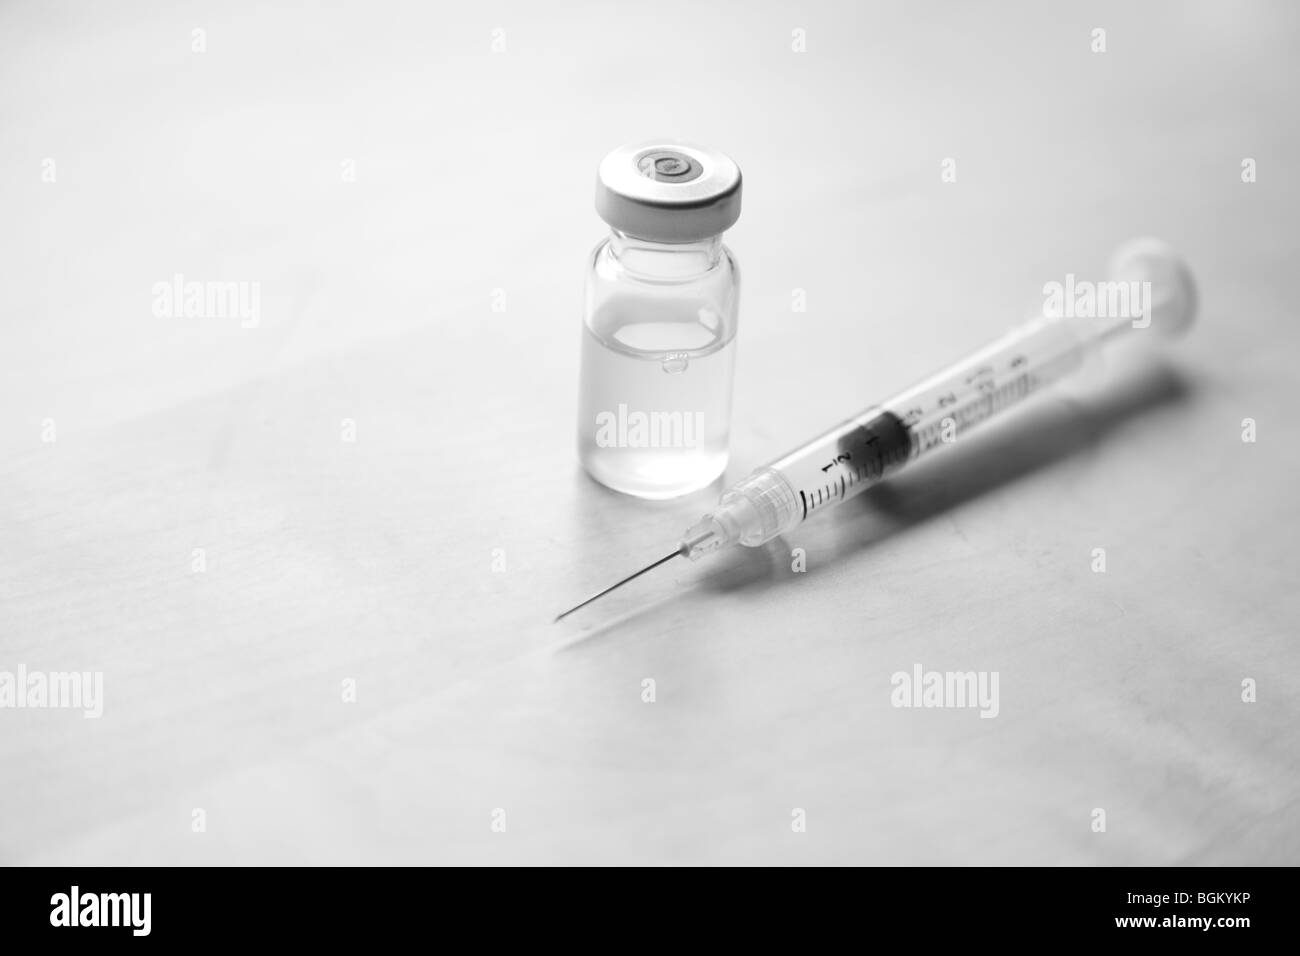 Syringe in black and white Stock Photo